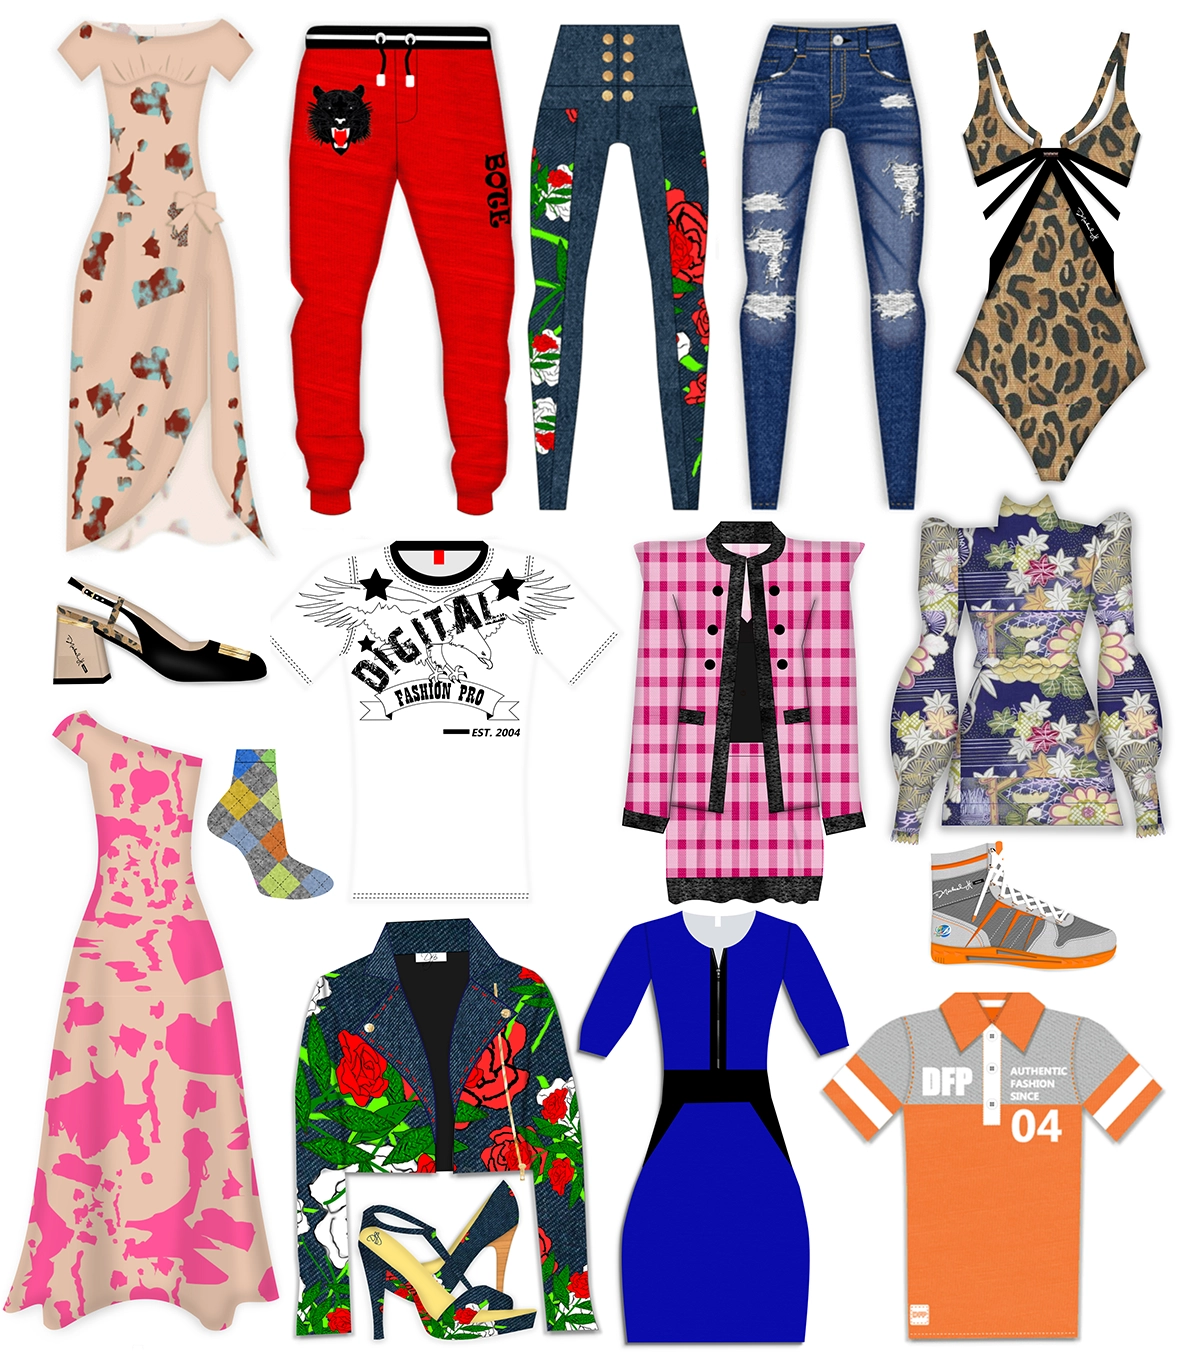 clothing design software sketches CAD - designing clothing - digital fashion pro